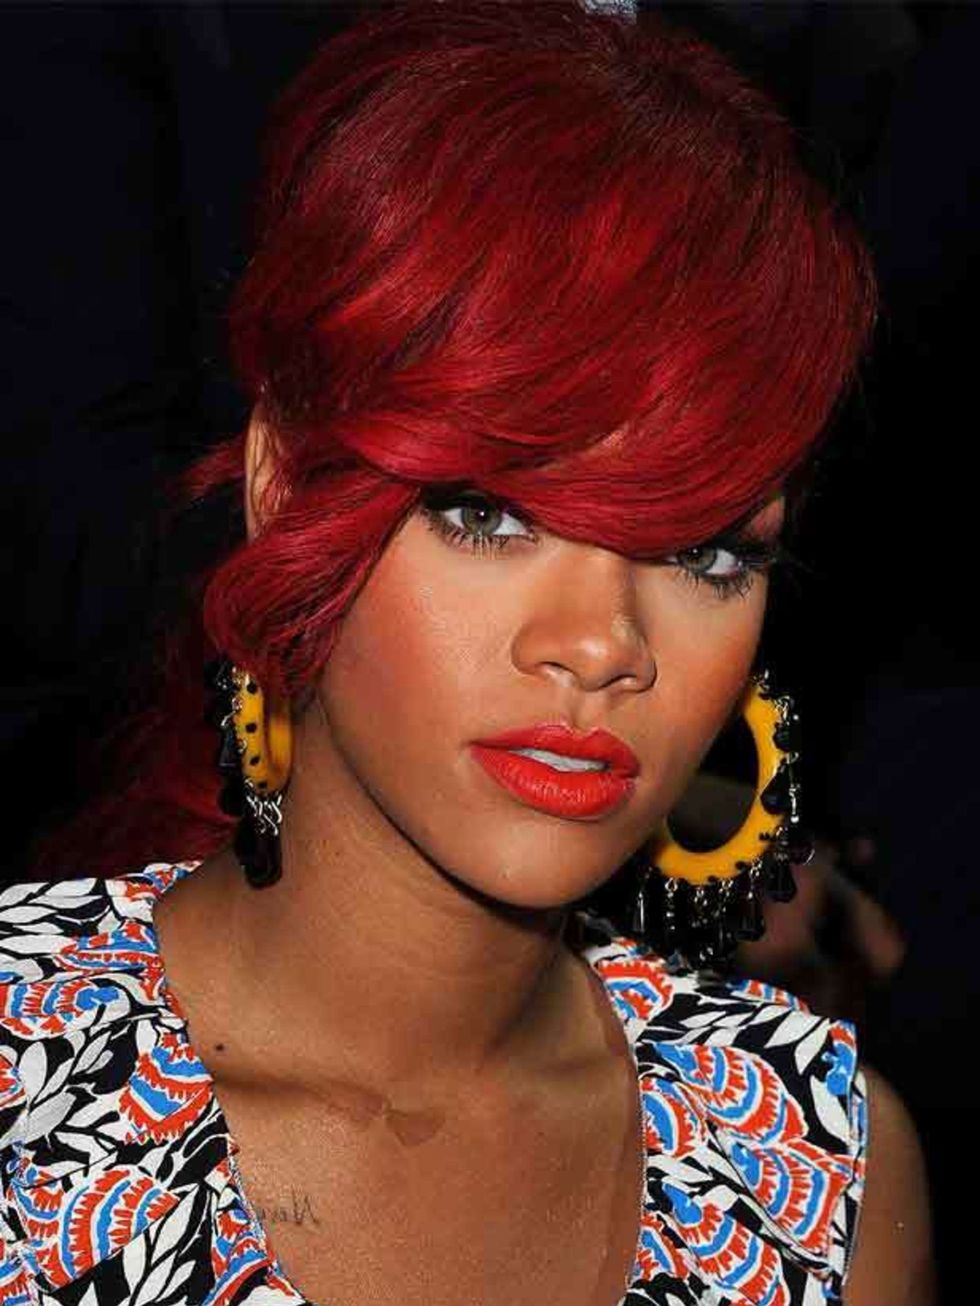 <p>Paris Fashion Week, October 2010</p><p><a href="http://www.elleuk.com/beauty/beauty-notes-daily/rihanna-s-make-up-secrets">Read Rihanna's make-up tips and secrets...</a></p>